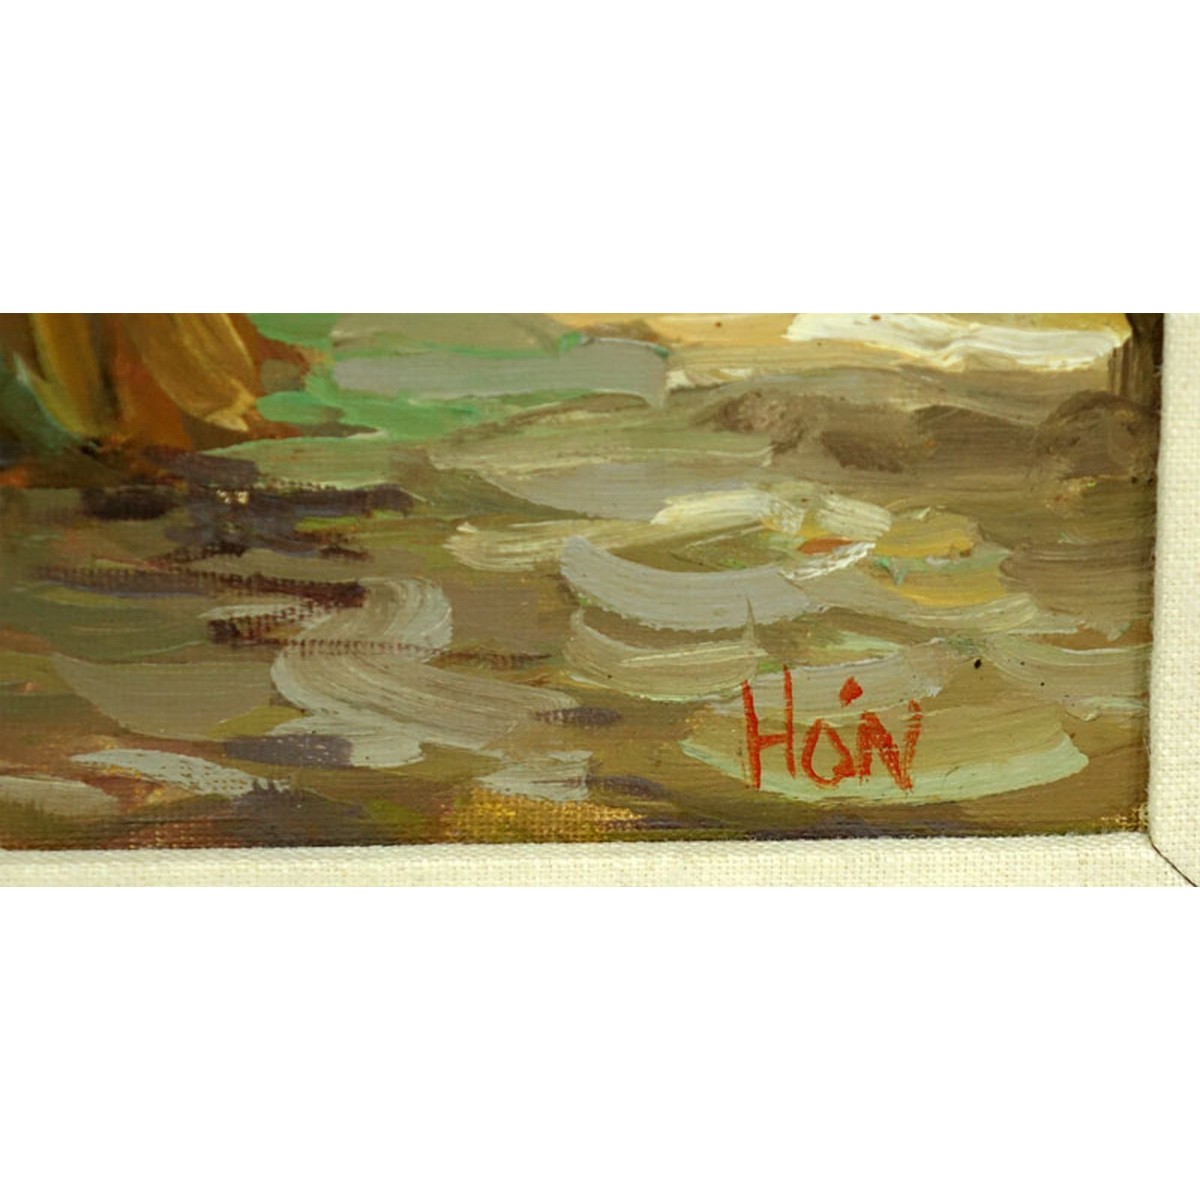 20th Century Oil on Board, Landscape Scene, Signed Lower Right. Presentation inscription and O'Neil Gallery label en verso.